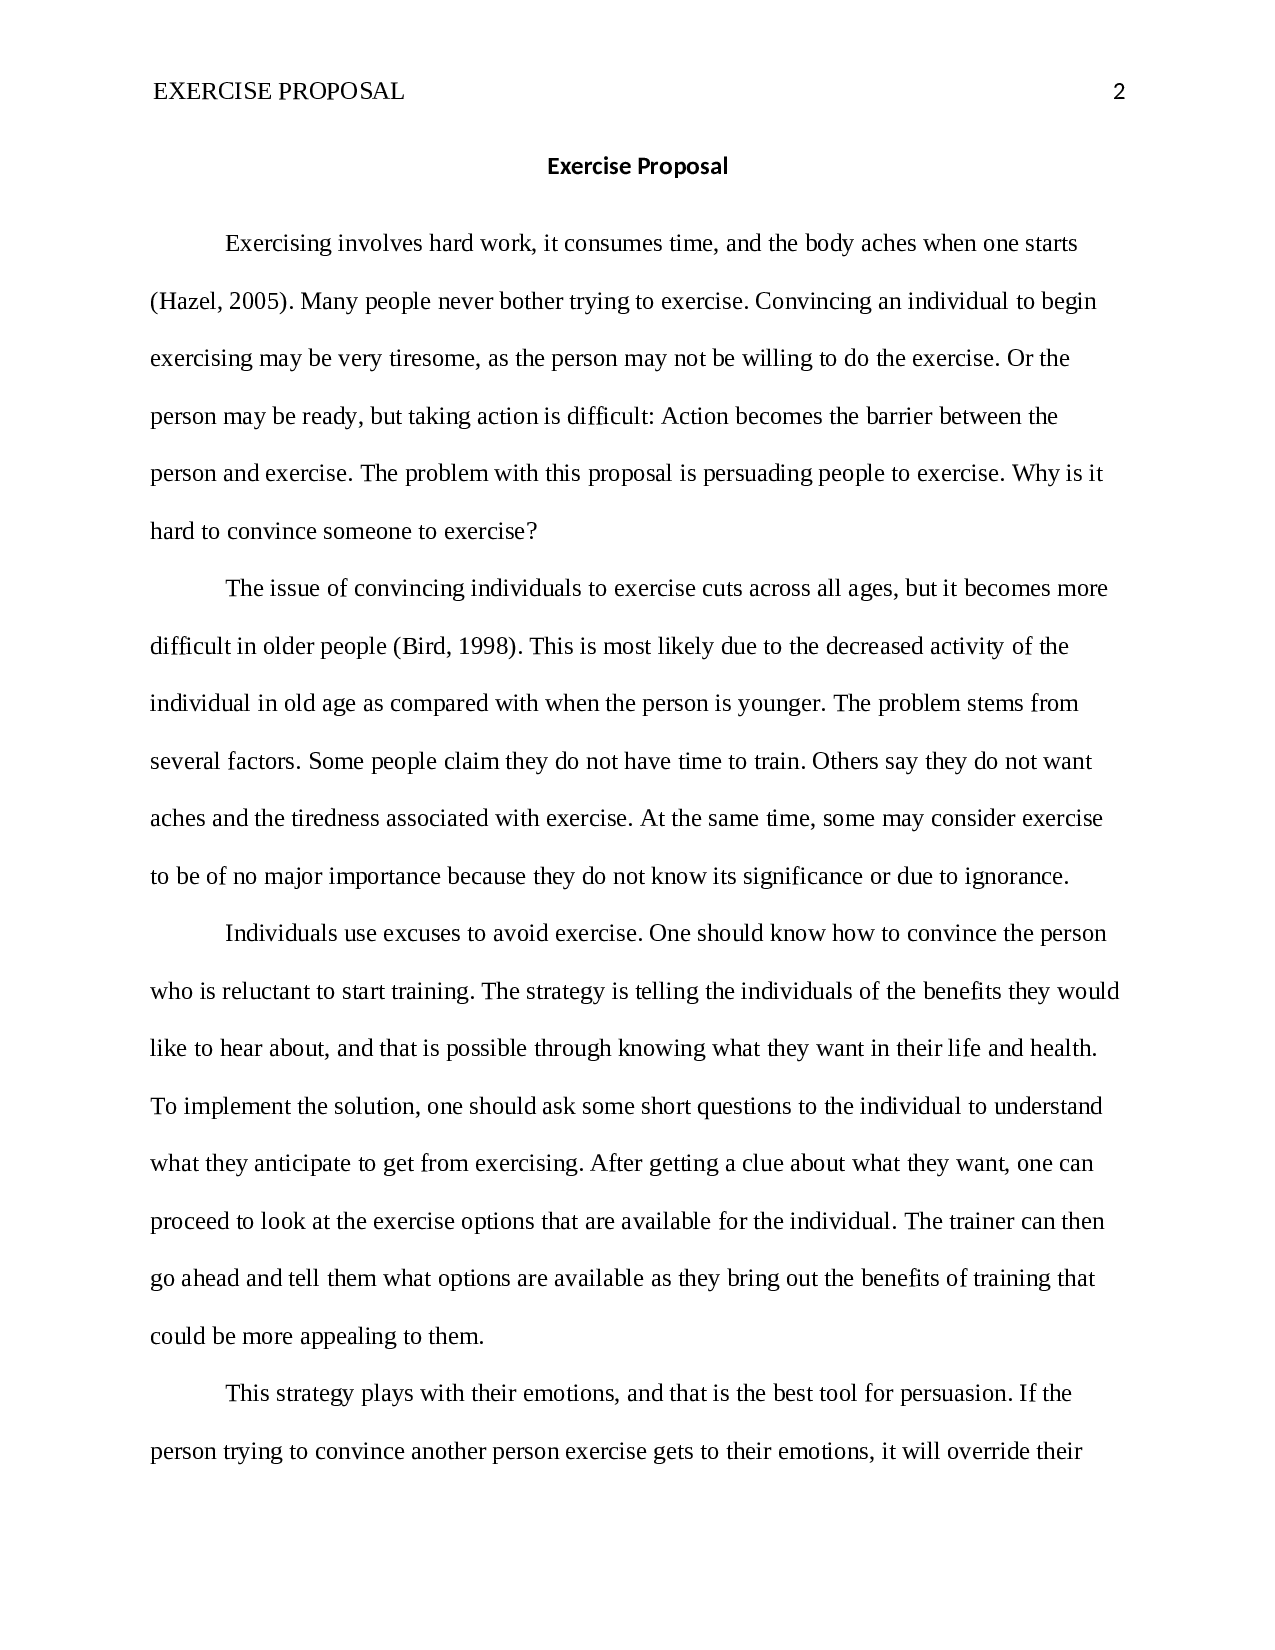 proposal letter essay